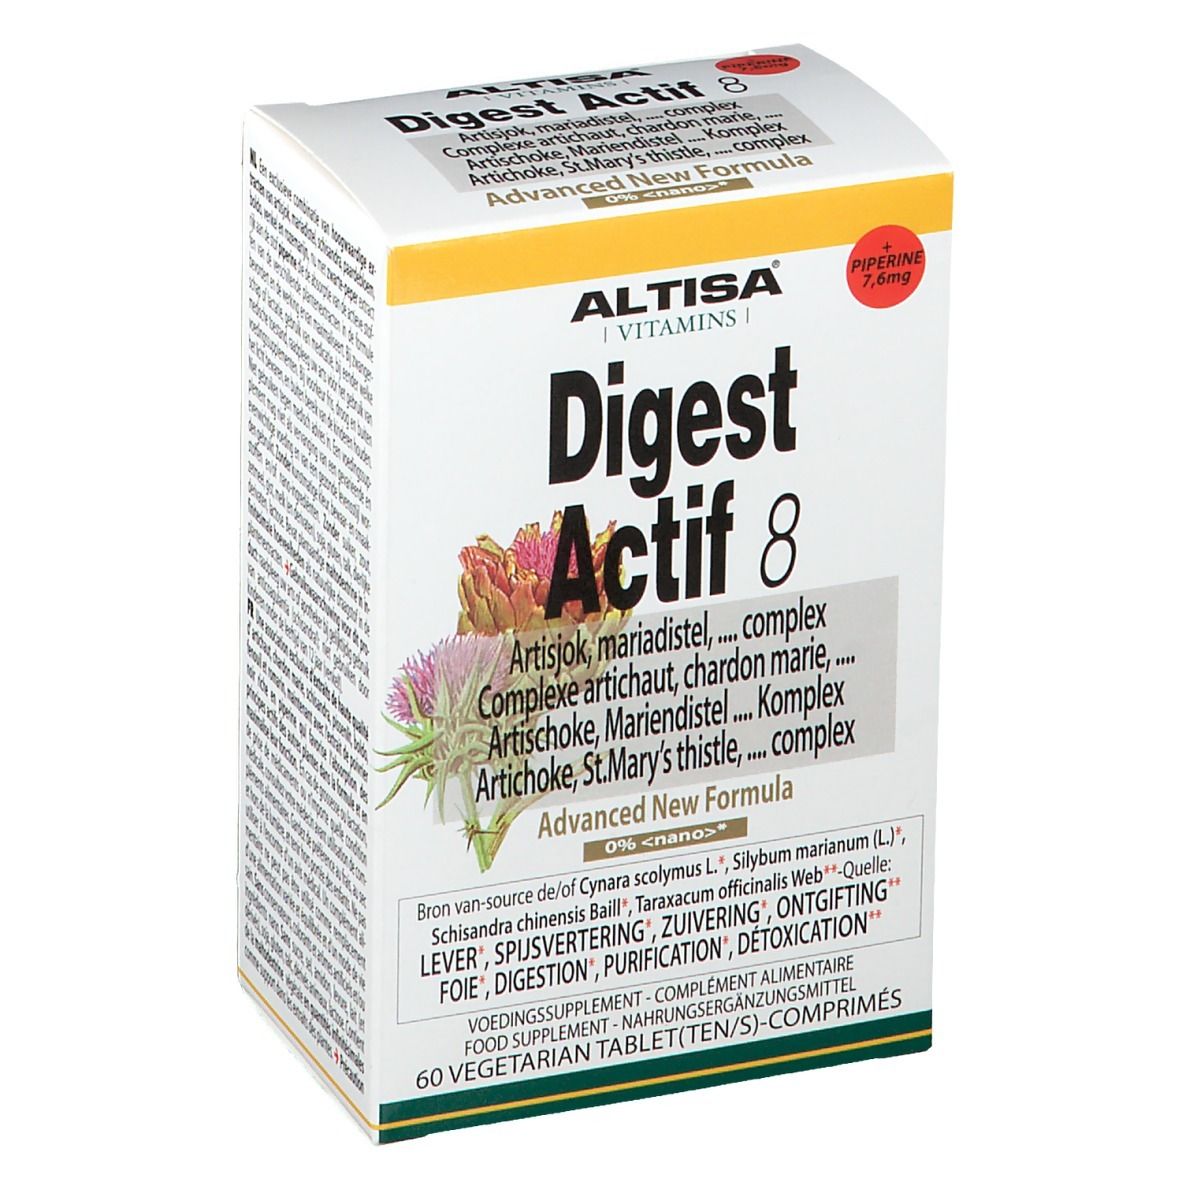 Altisa® Digest Actif 8